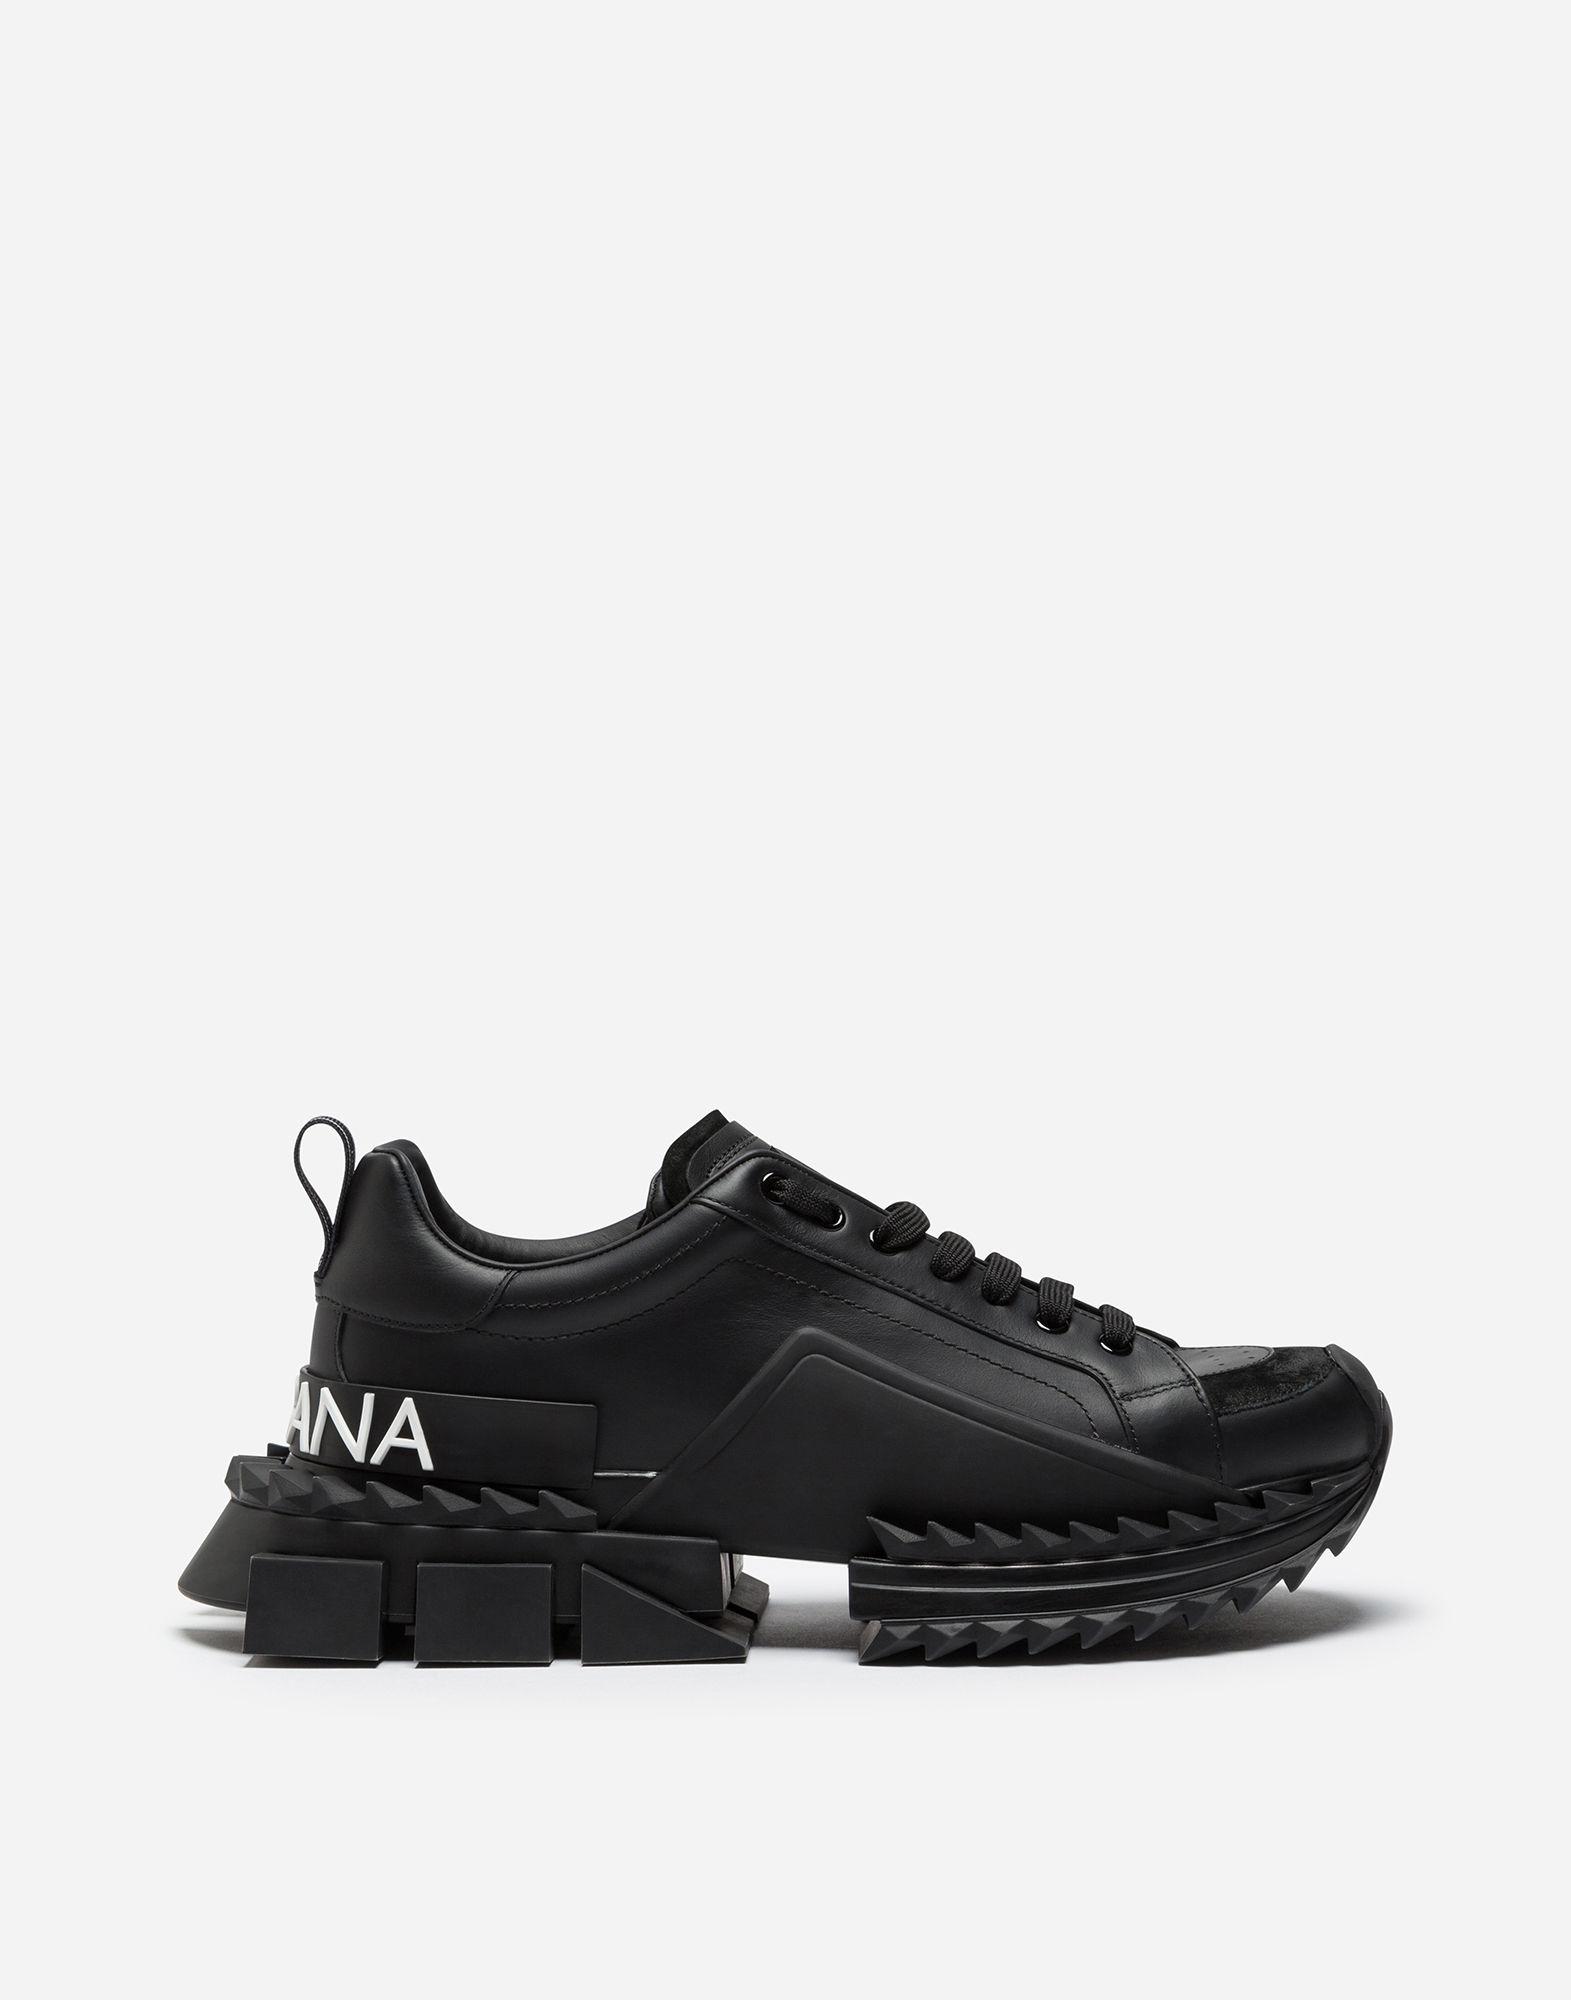 Dolce & Gabbana Super King Sneakers in Black | Lyst